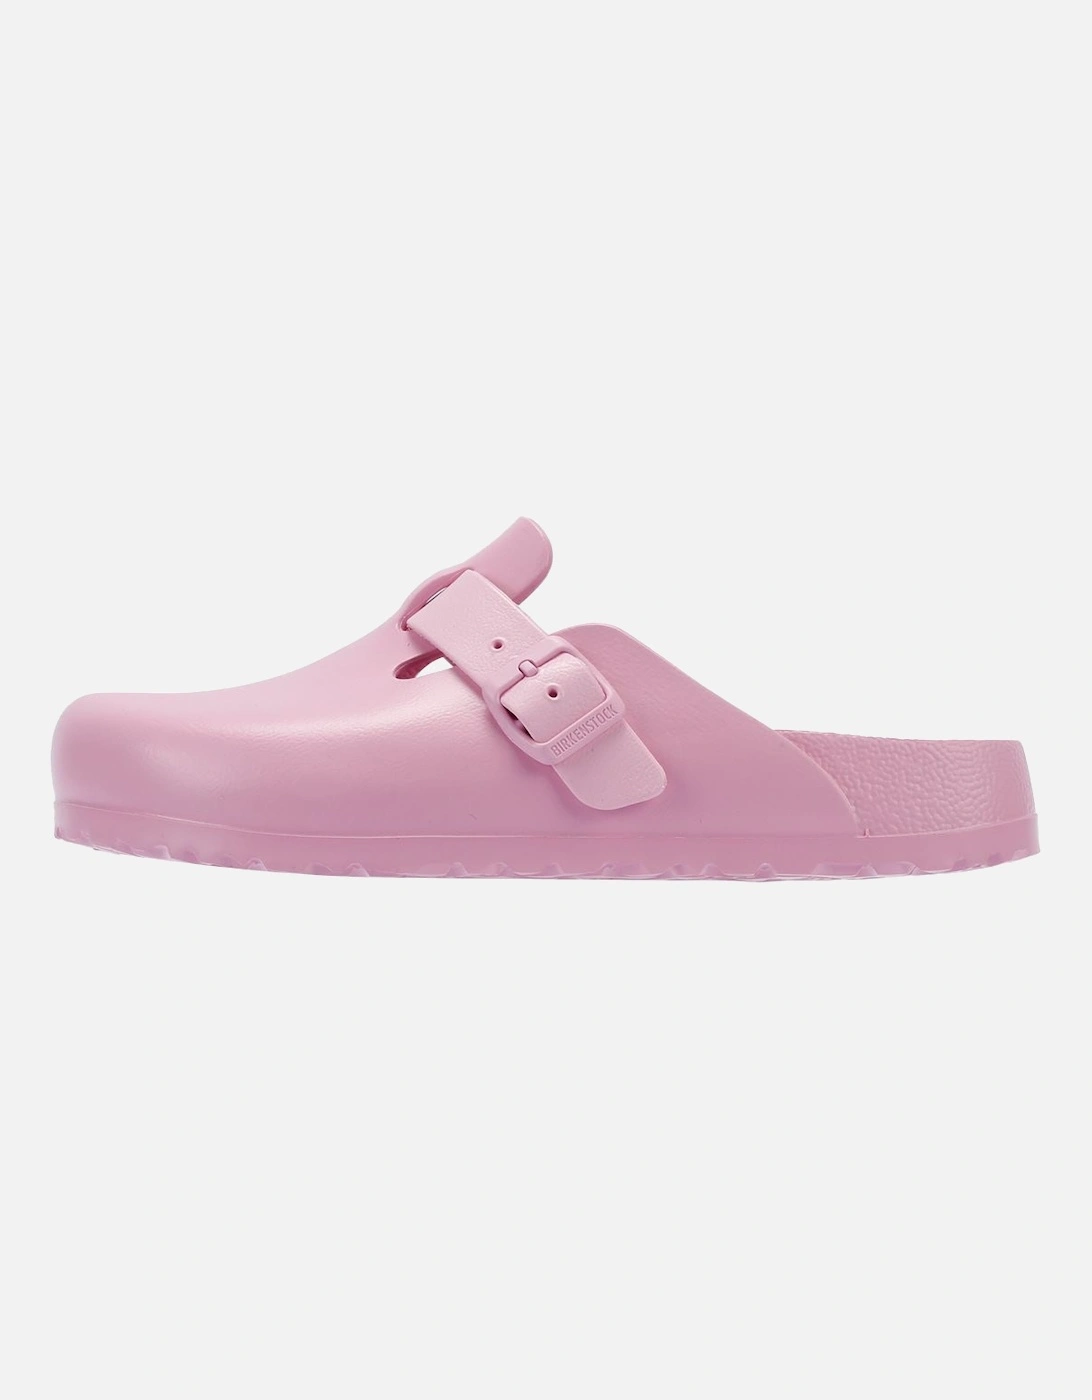 Eva Pink Sandals